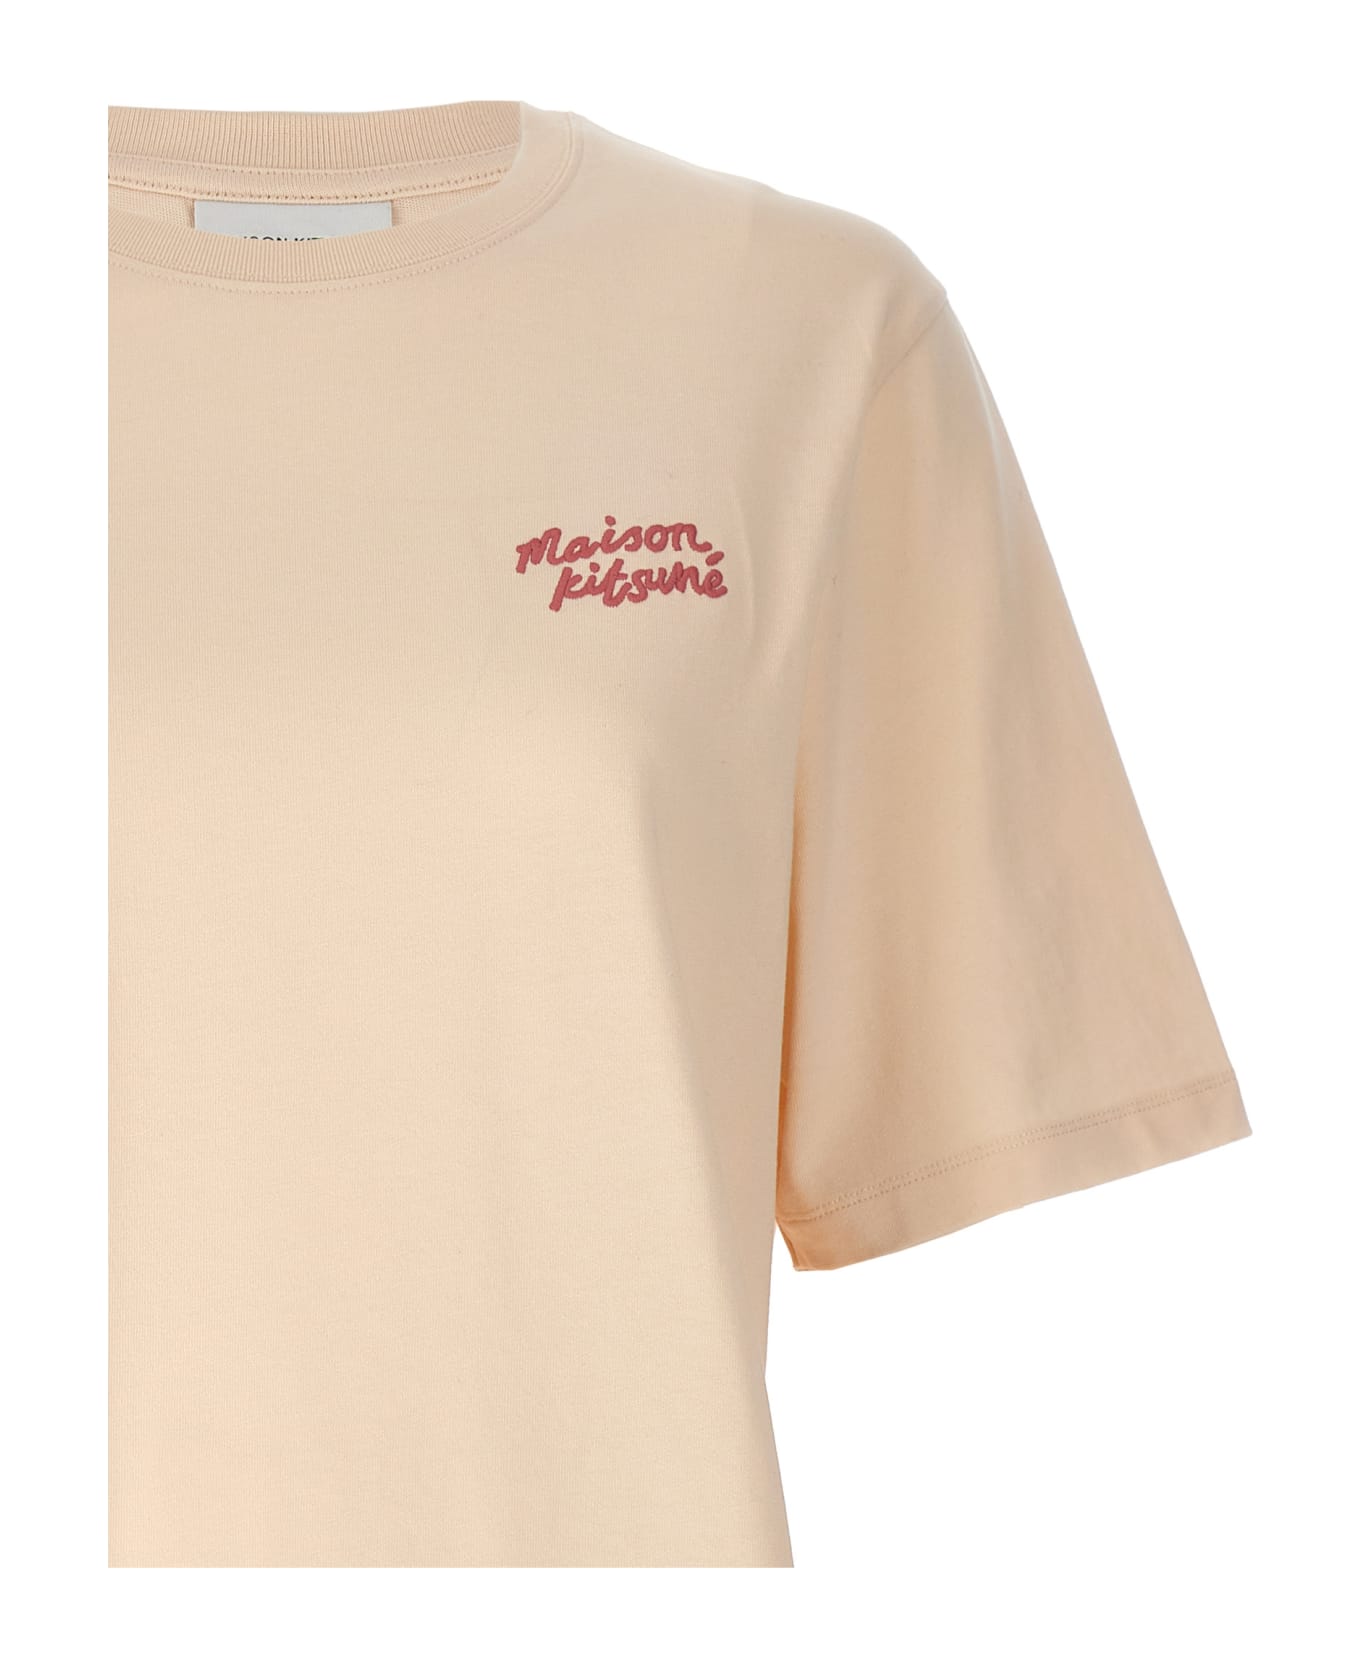 Maison Kitsuné 'maison Kitsuné Handwriting' T-shirt - Beige Tシャツ